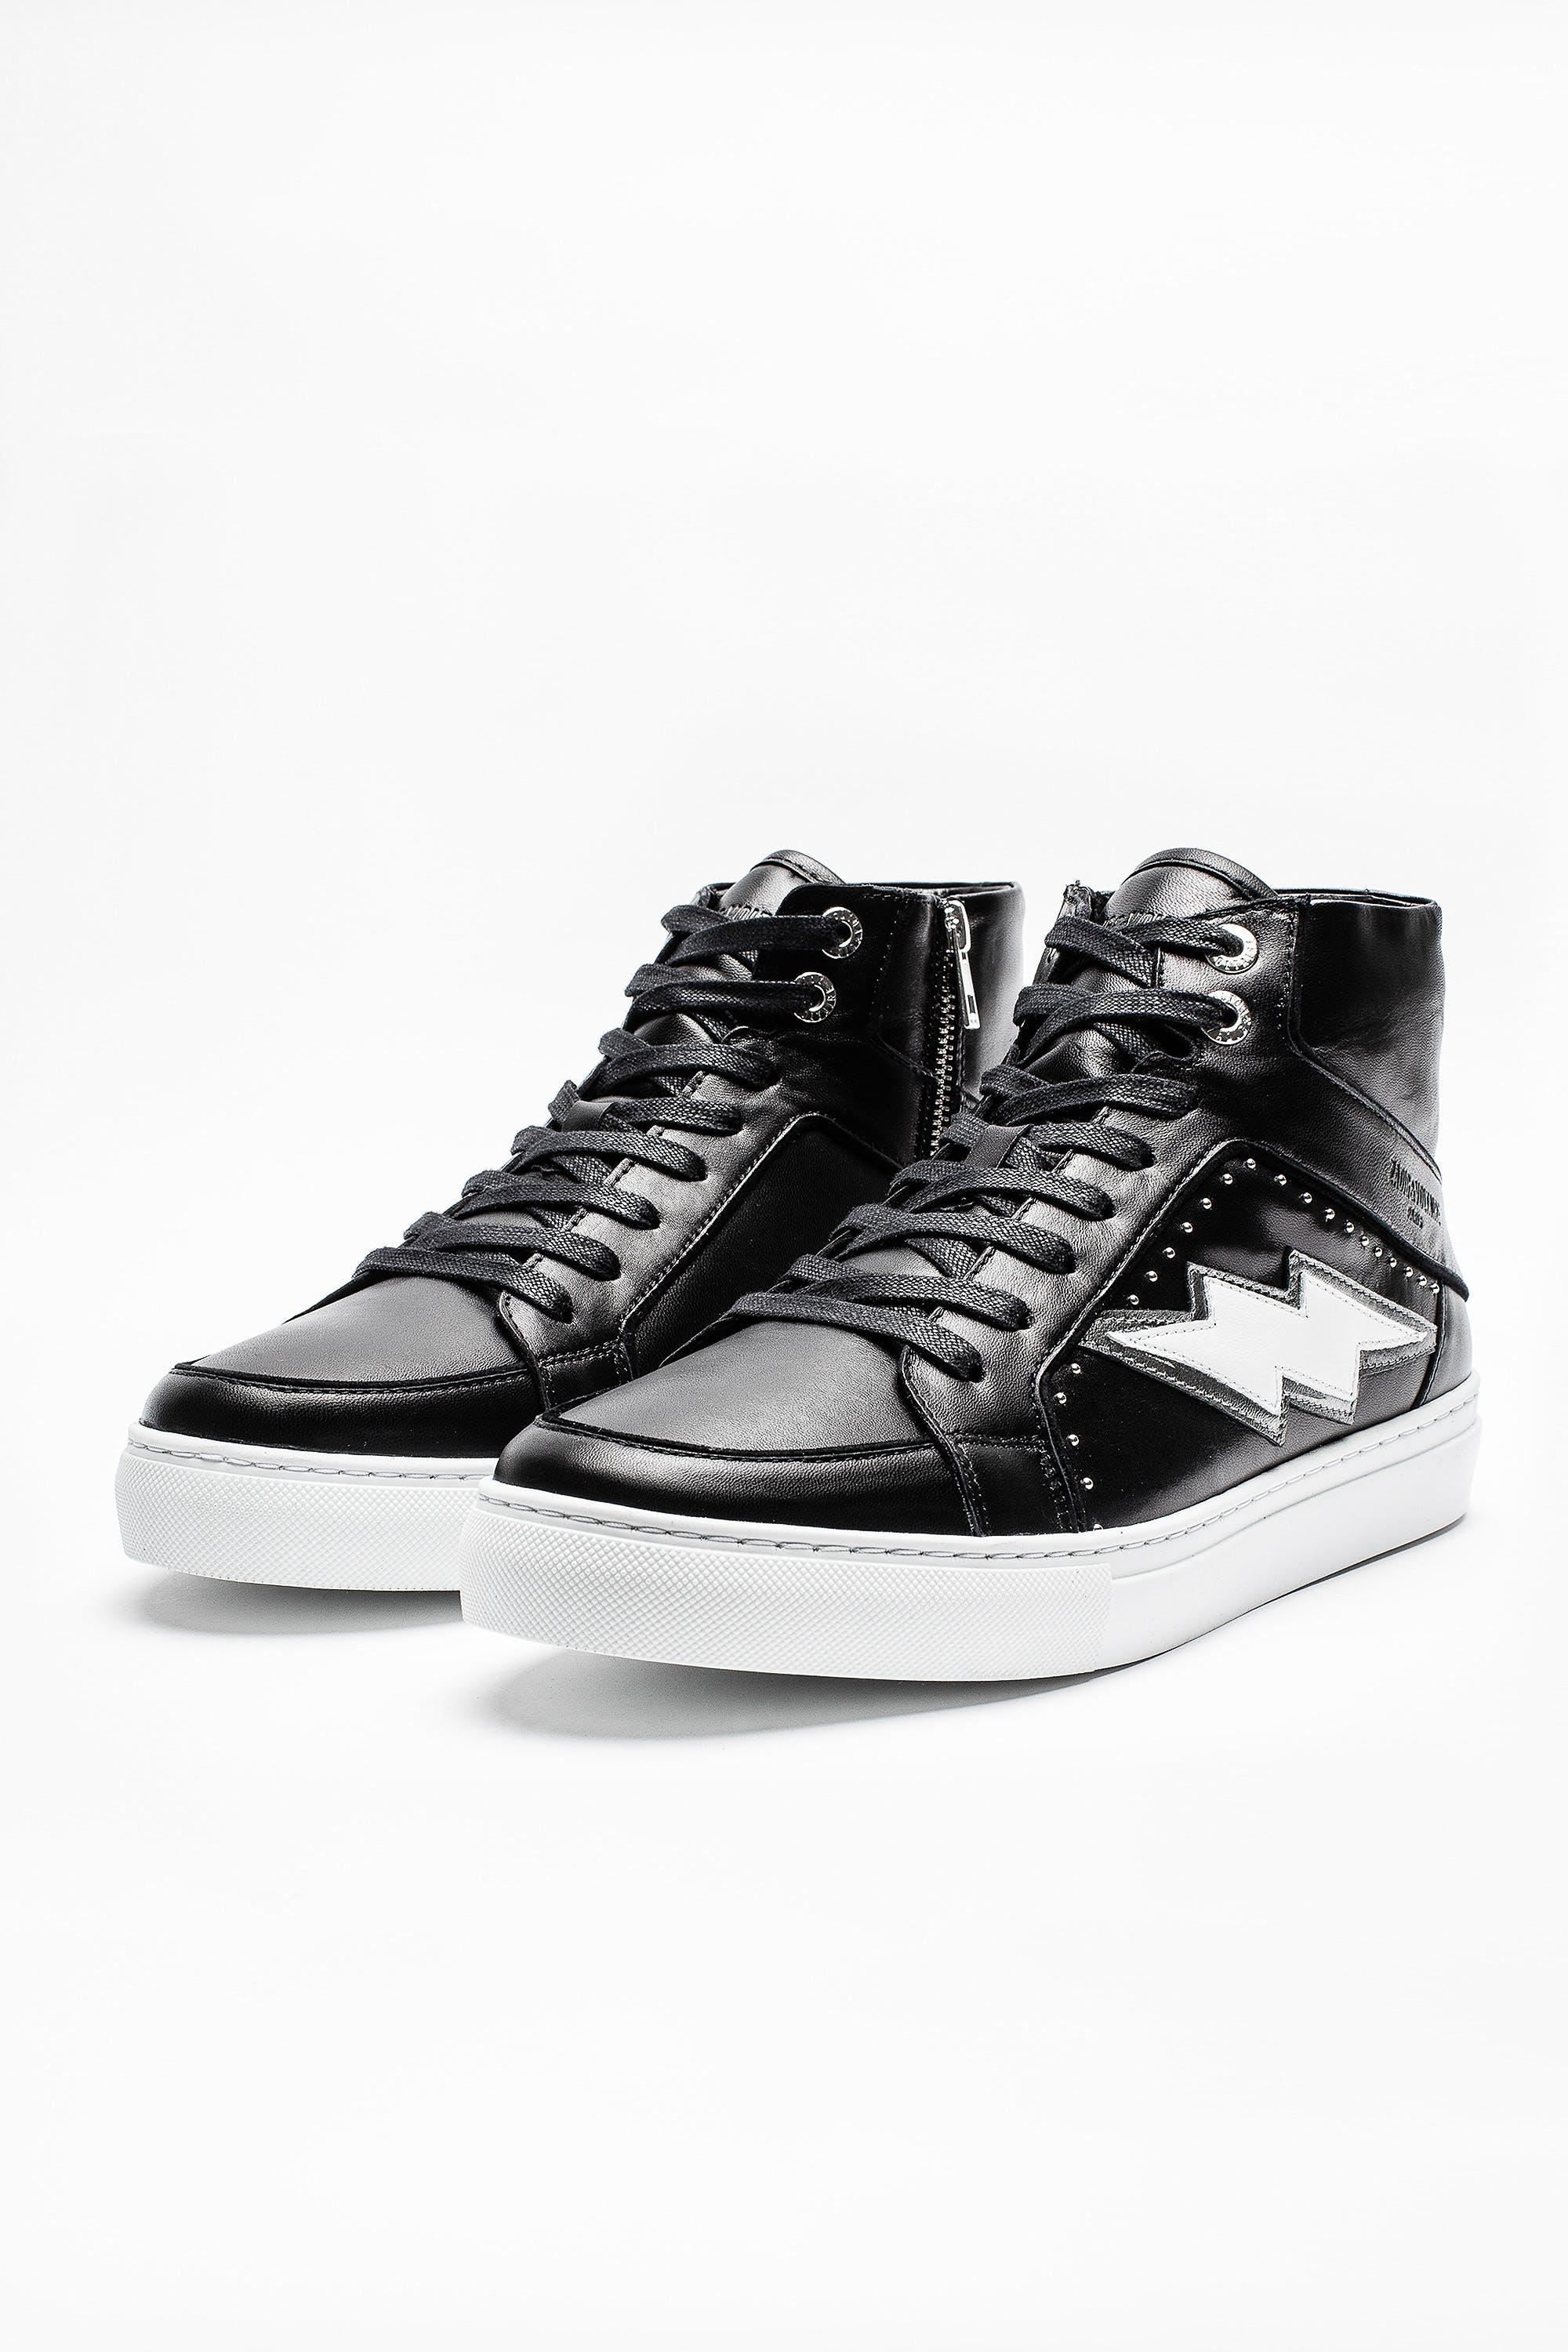 Zadig & Voltaire Zv1747 High Flash Skull Sneakers in Black | Lyst